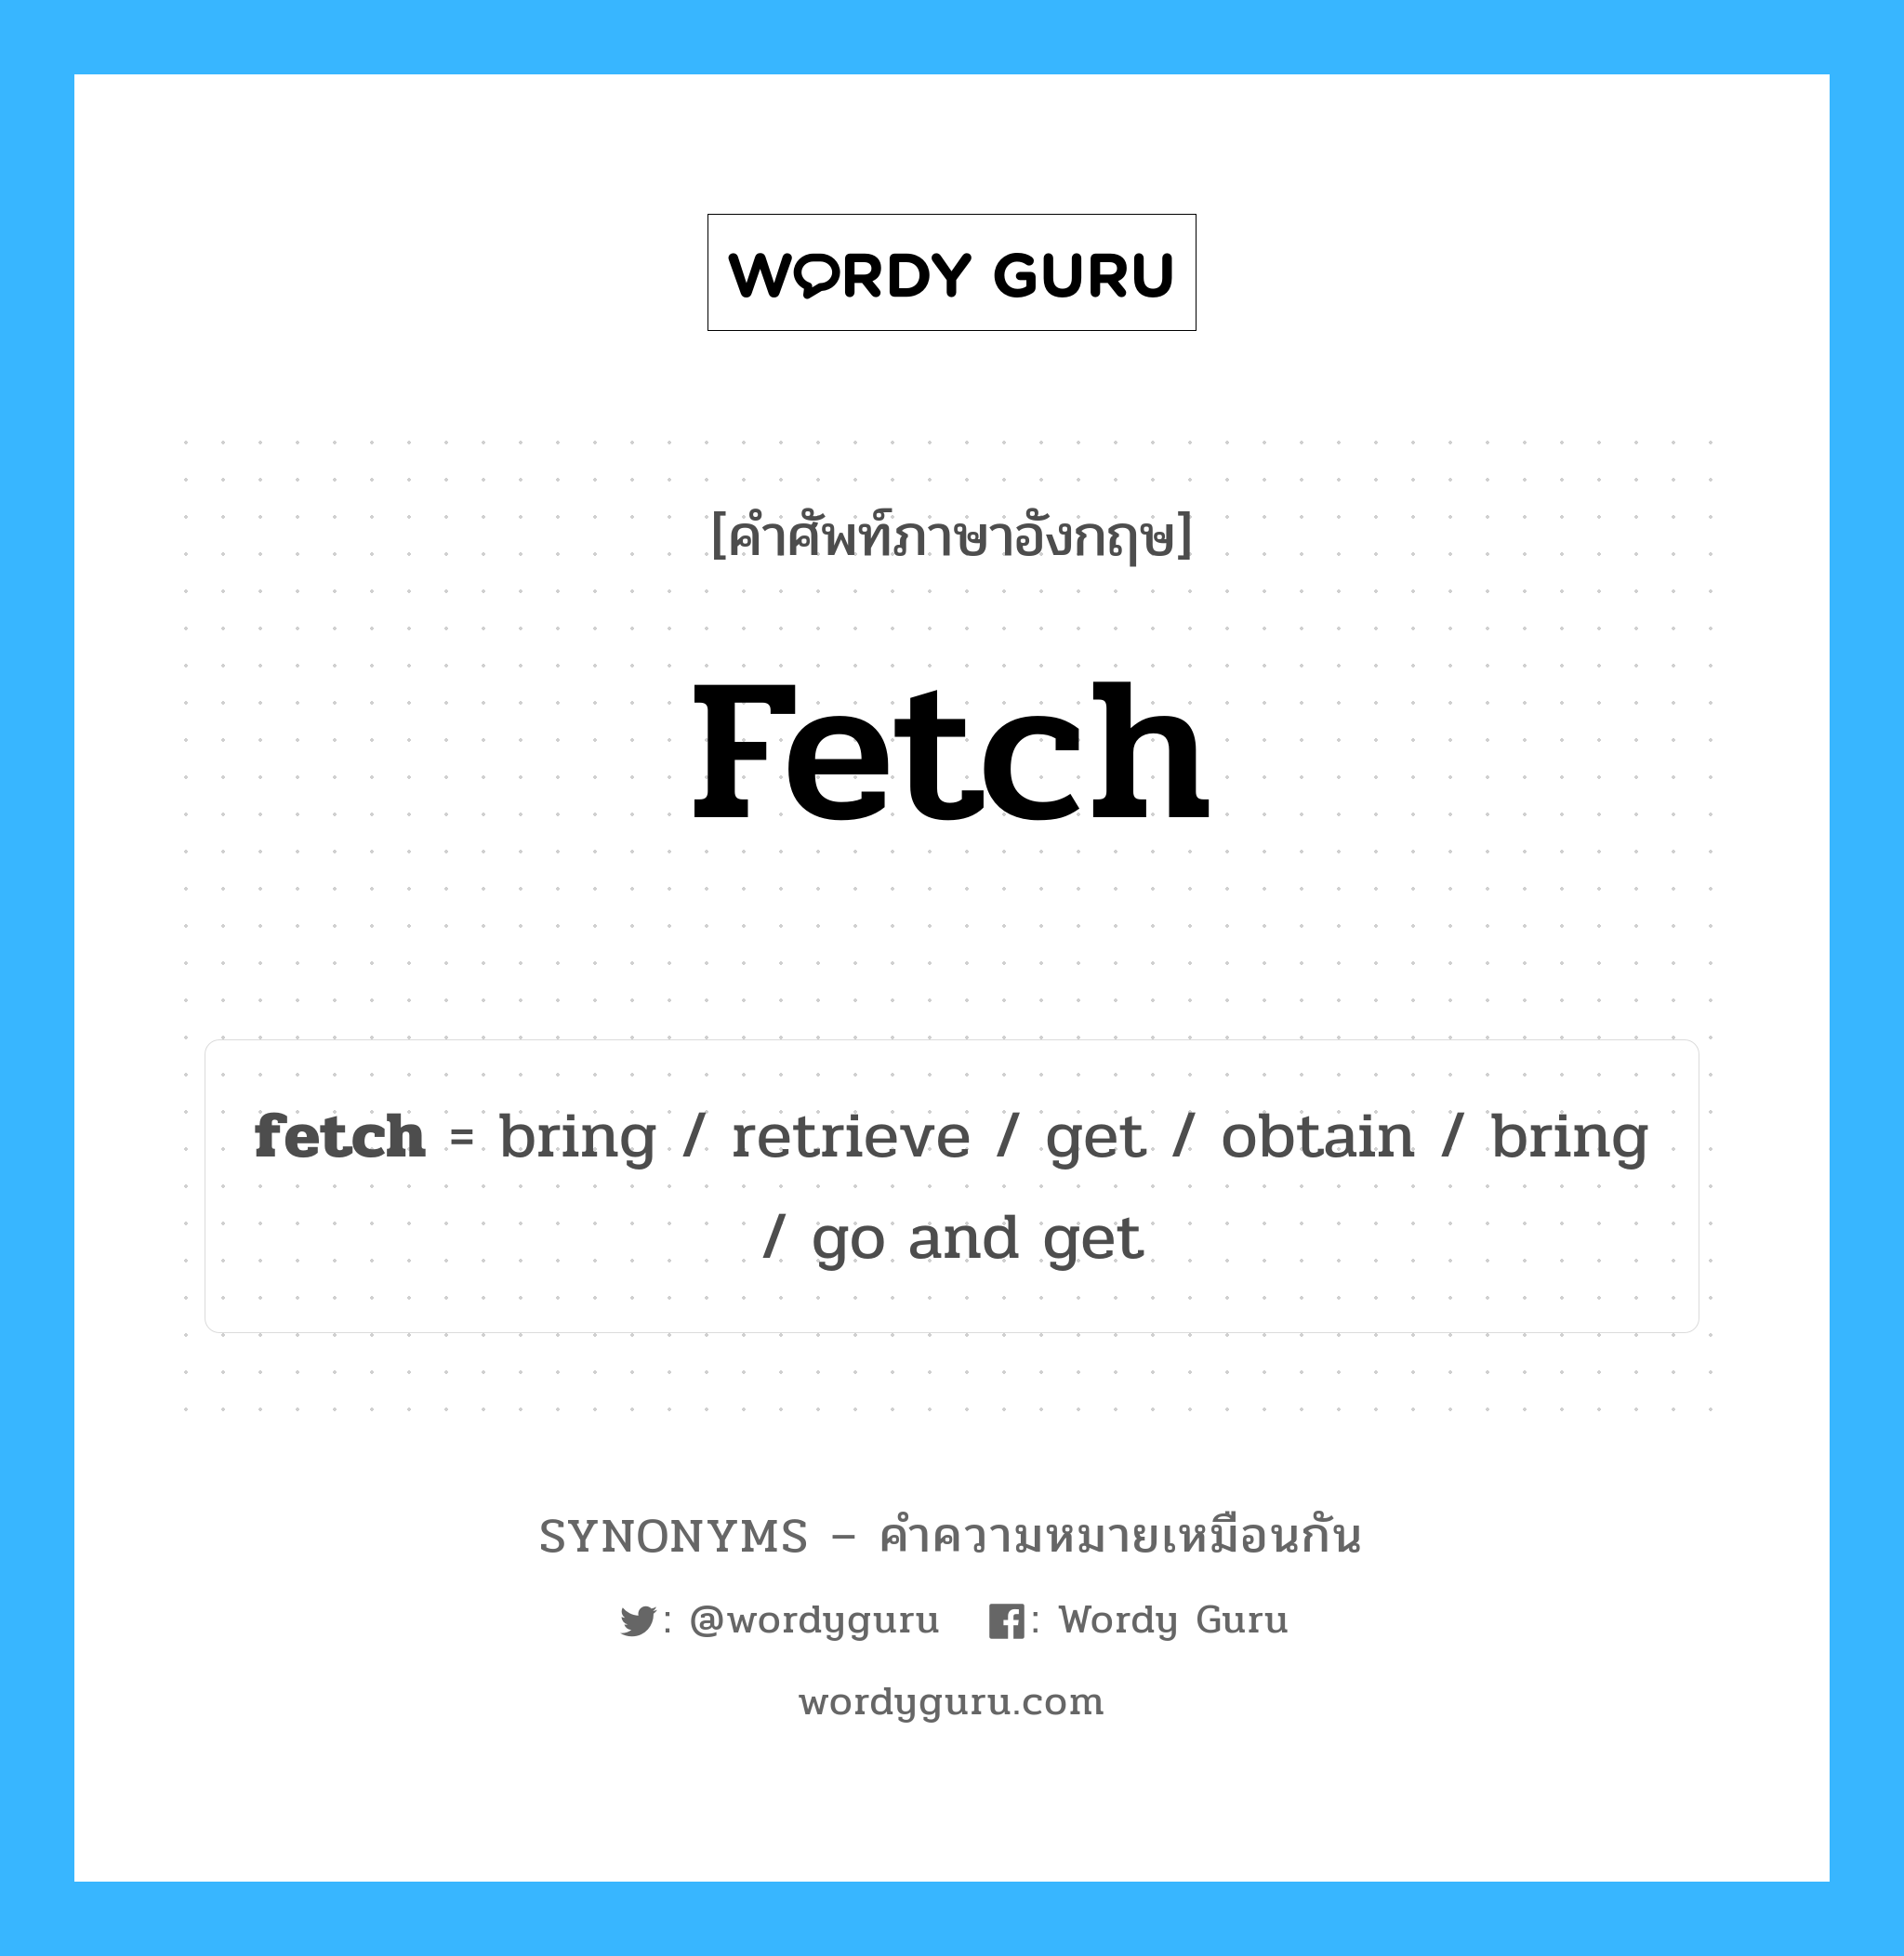 obtain เป็นหนึ่งใน fetch และมีคำอื่น ๆ อีกดังนี้, คำศัพท์ภาษาอังกฤษ obtain ความหมายคล้ายกันกับ fetch แปลว่า ขอรับ หมวด fetch